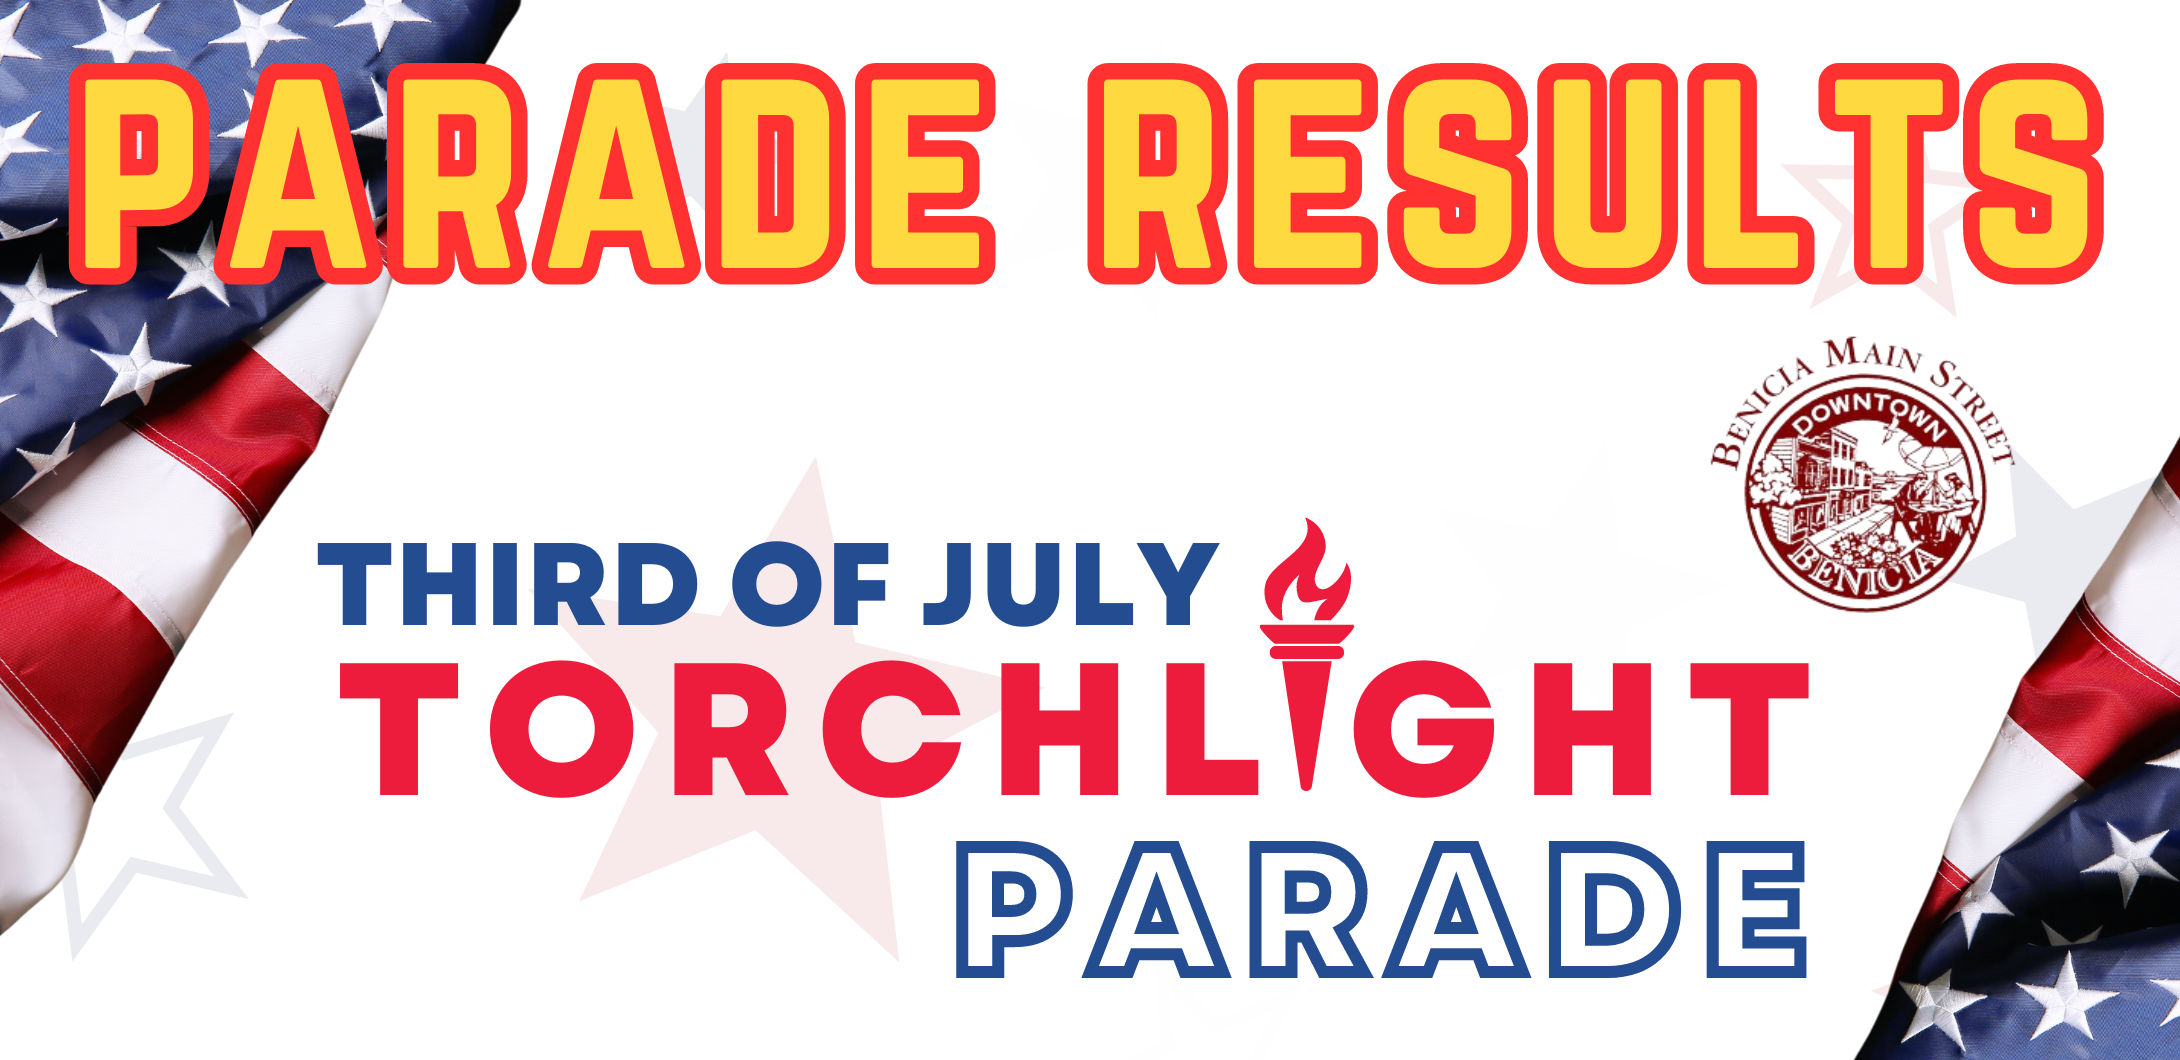 Torchlight Parade] (2180 x 1060 px) (2)